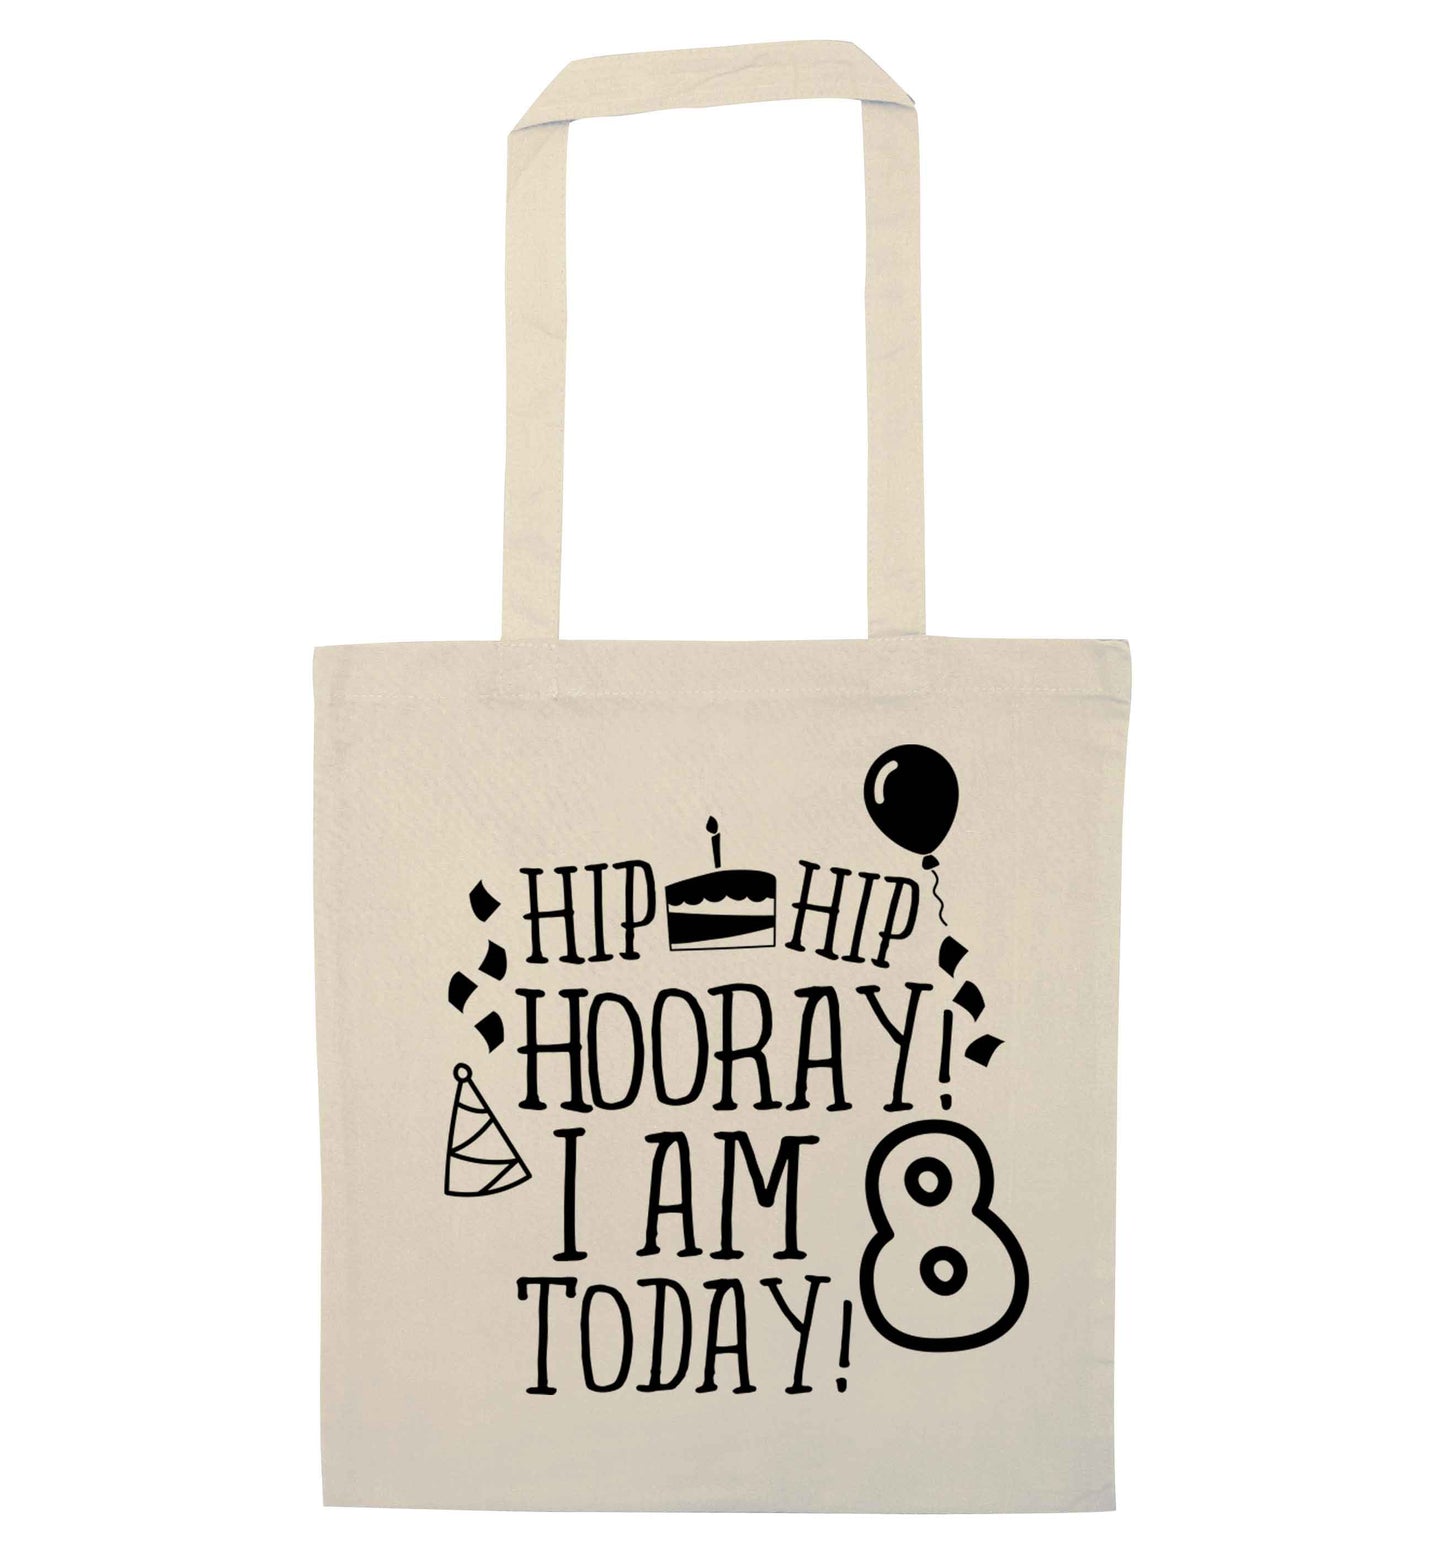 Hip hip hooray I am 8 today! natural tote bag